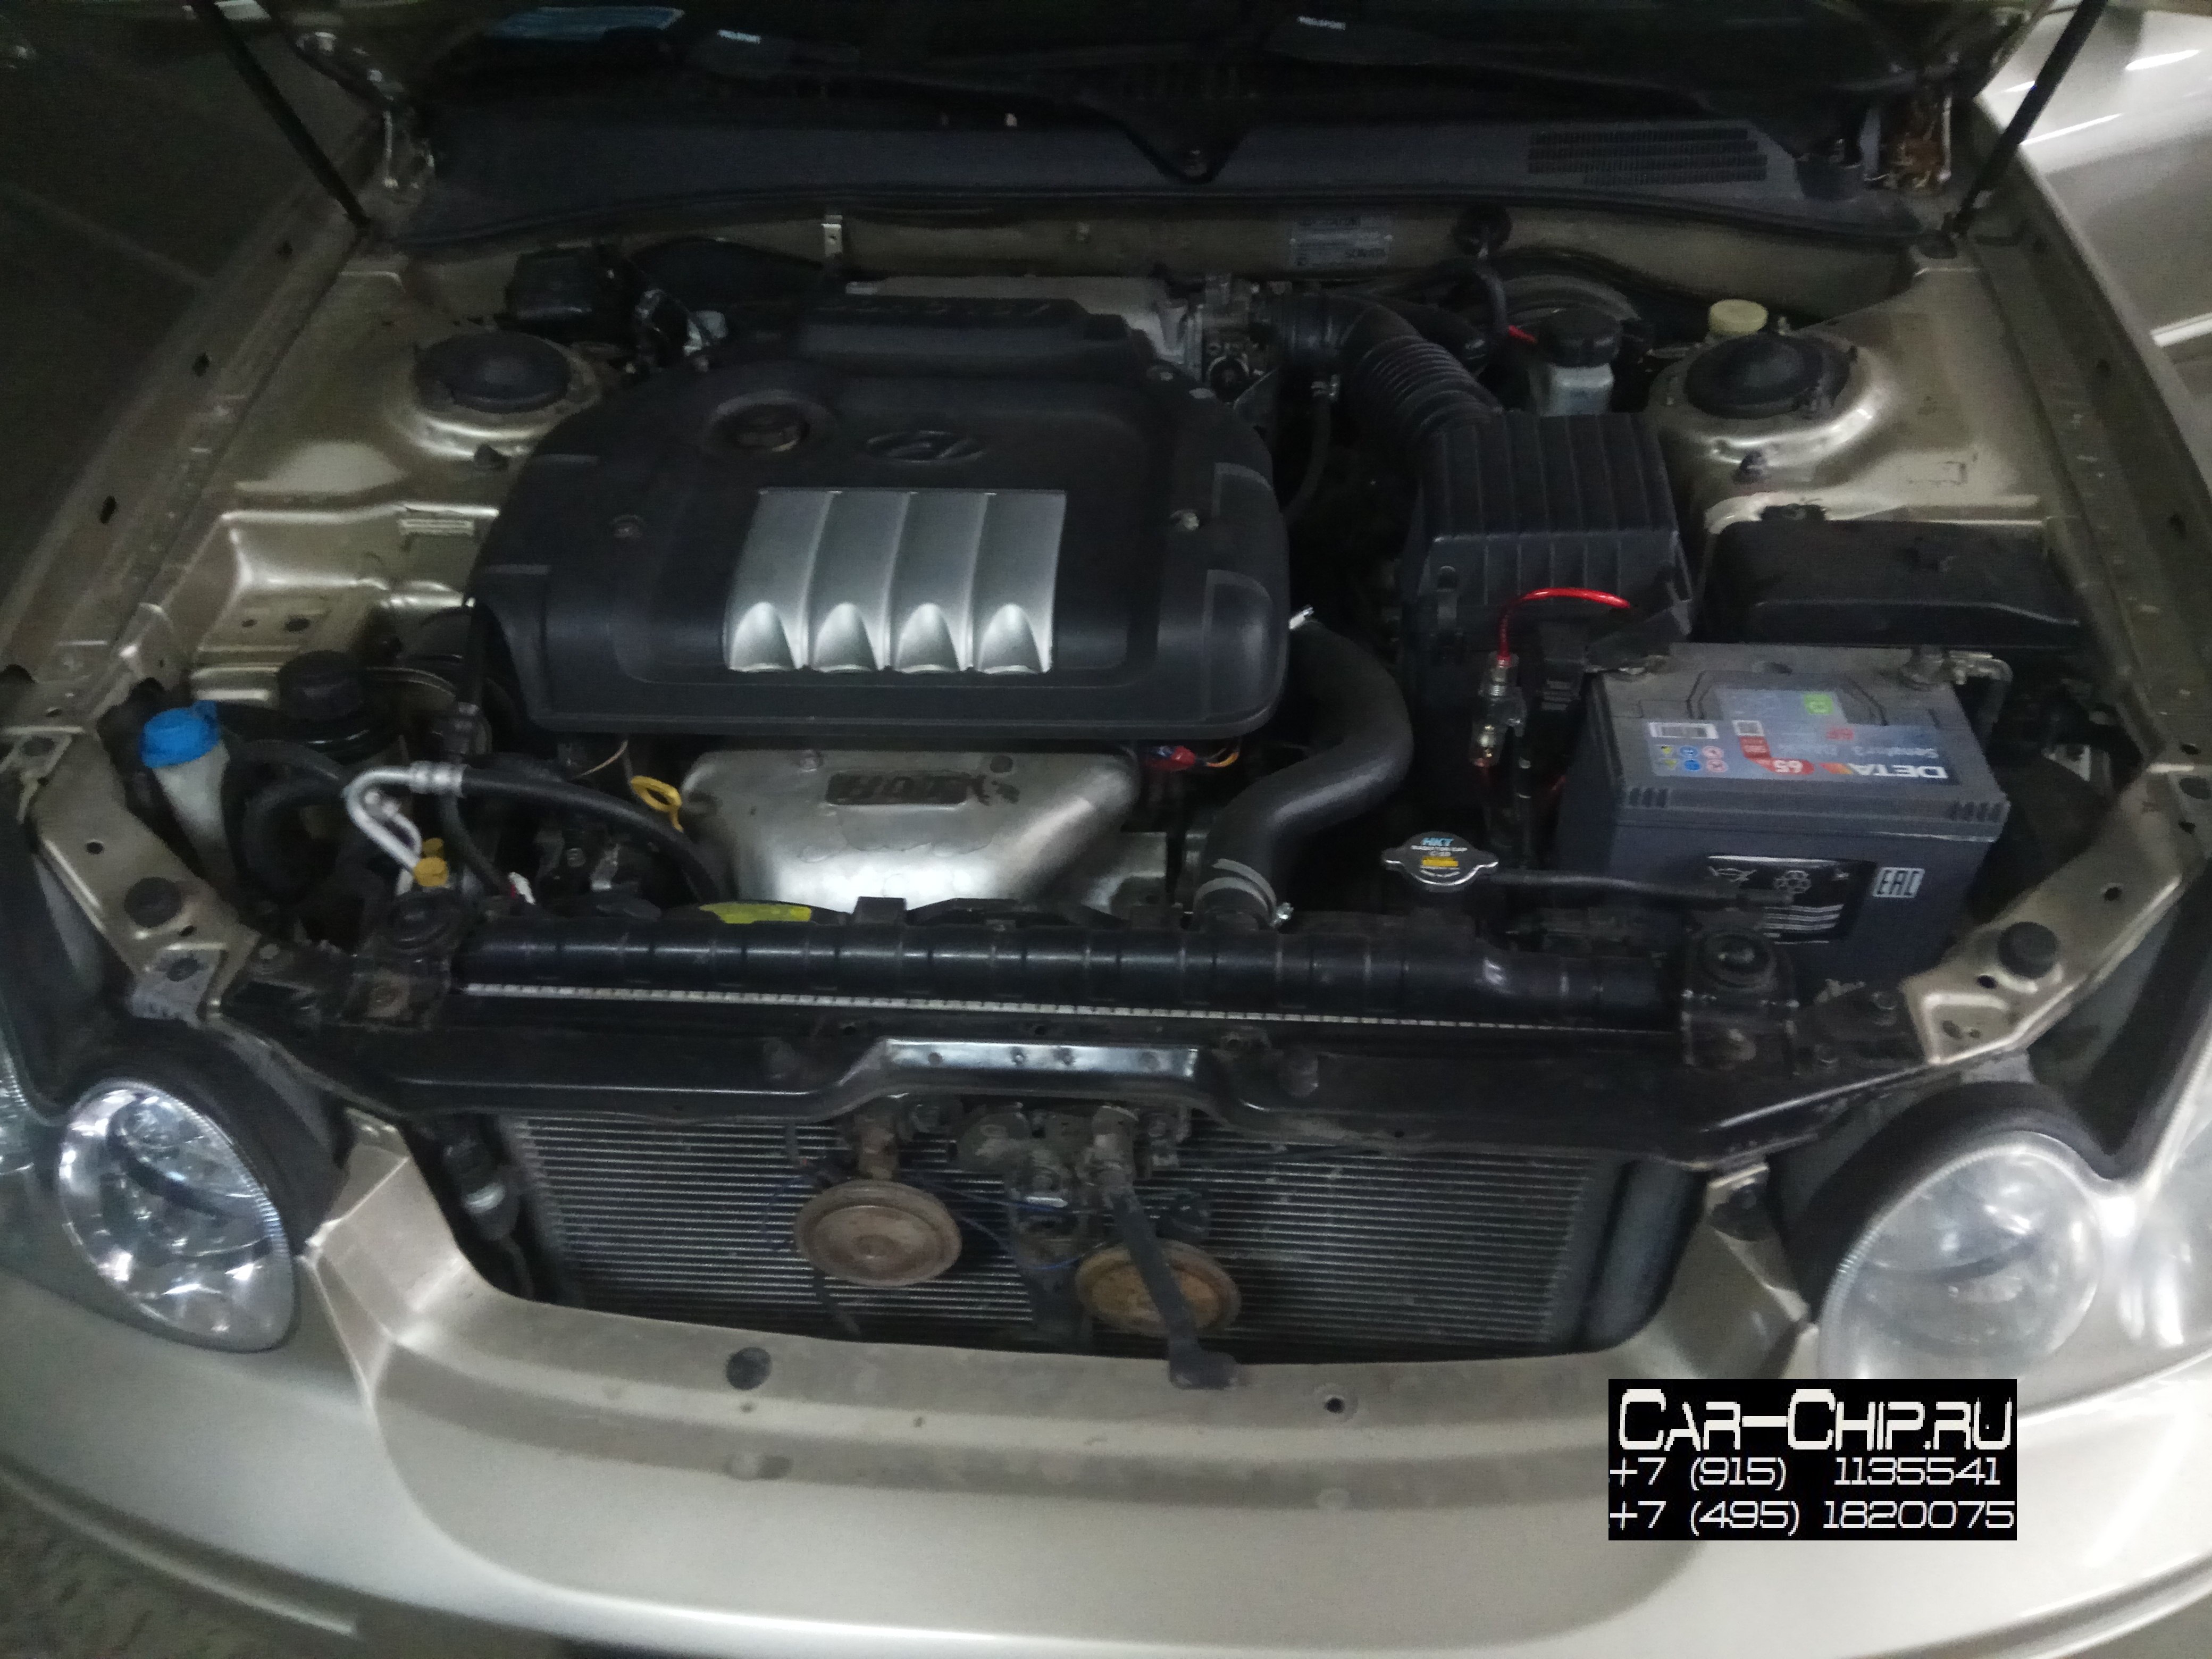 Hyundai Sonata EF с двигателем Sirius 2.0 131л.с. оптимизация штатного ПО перевод на Евро2